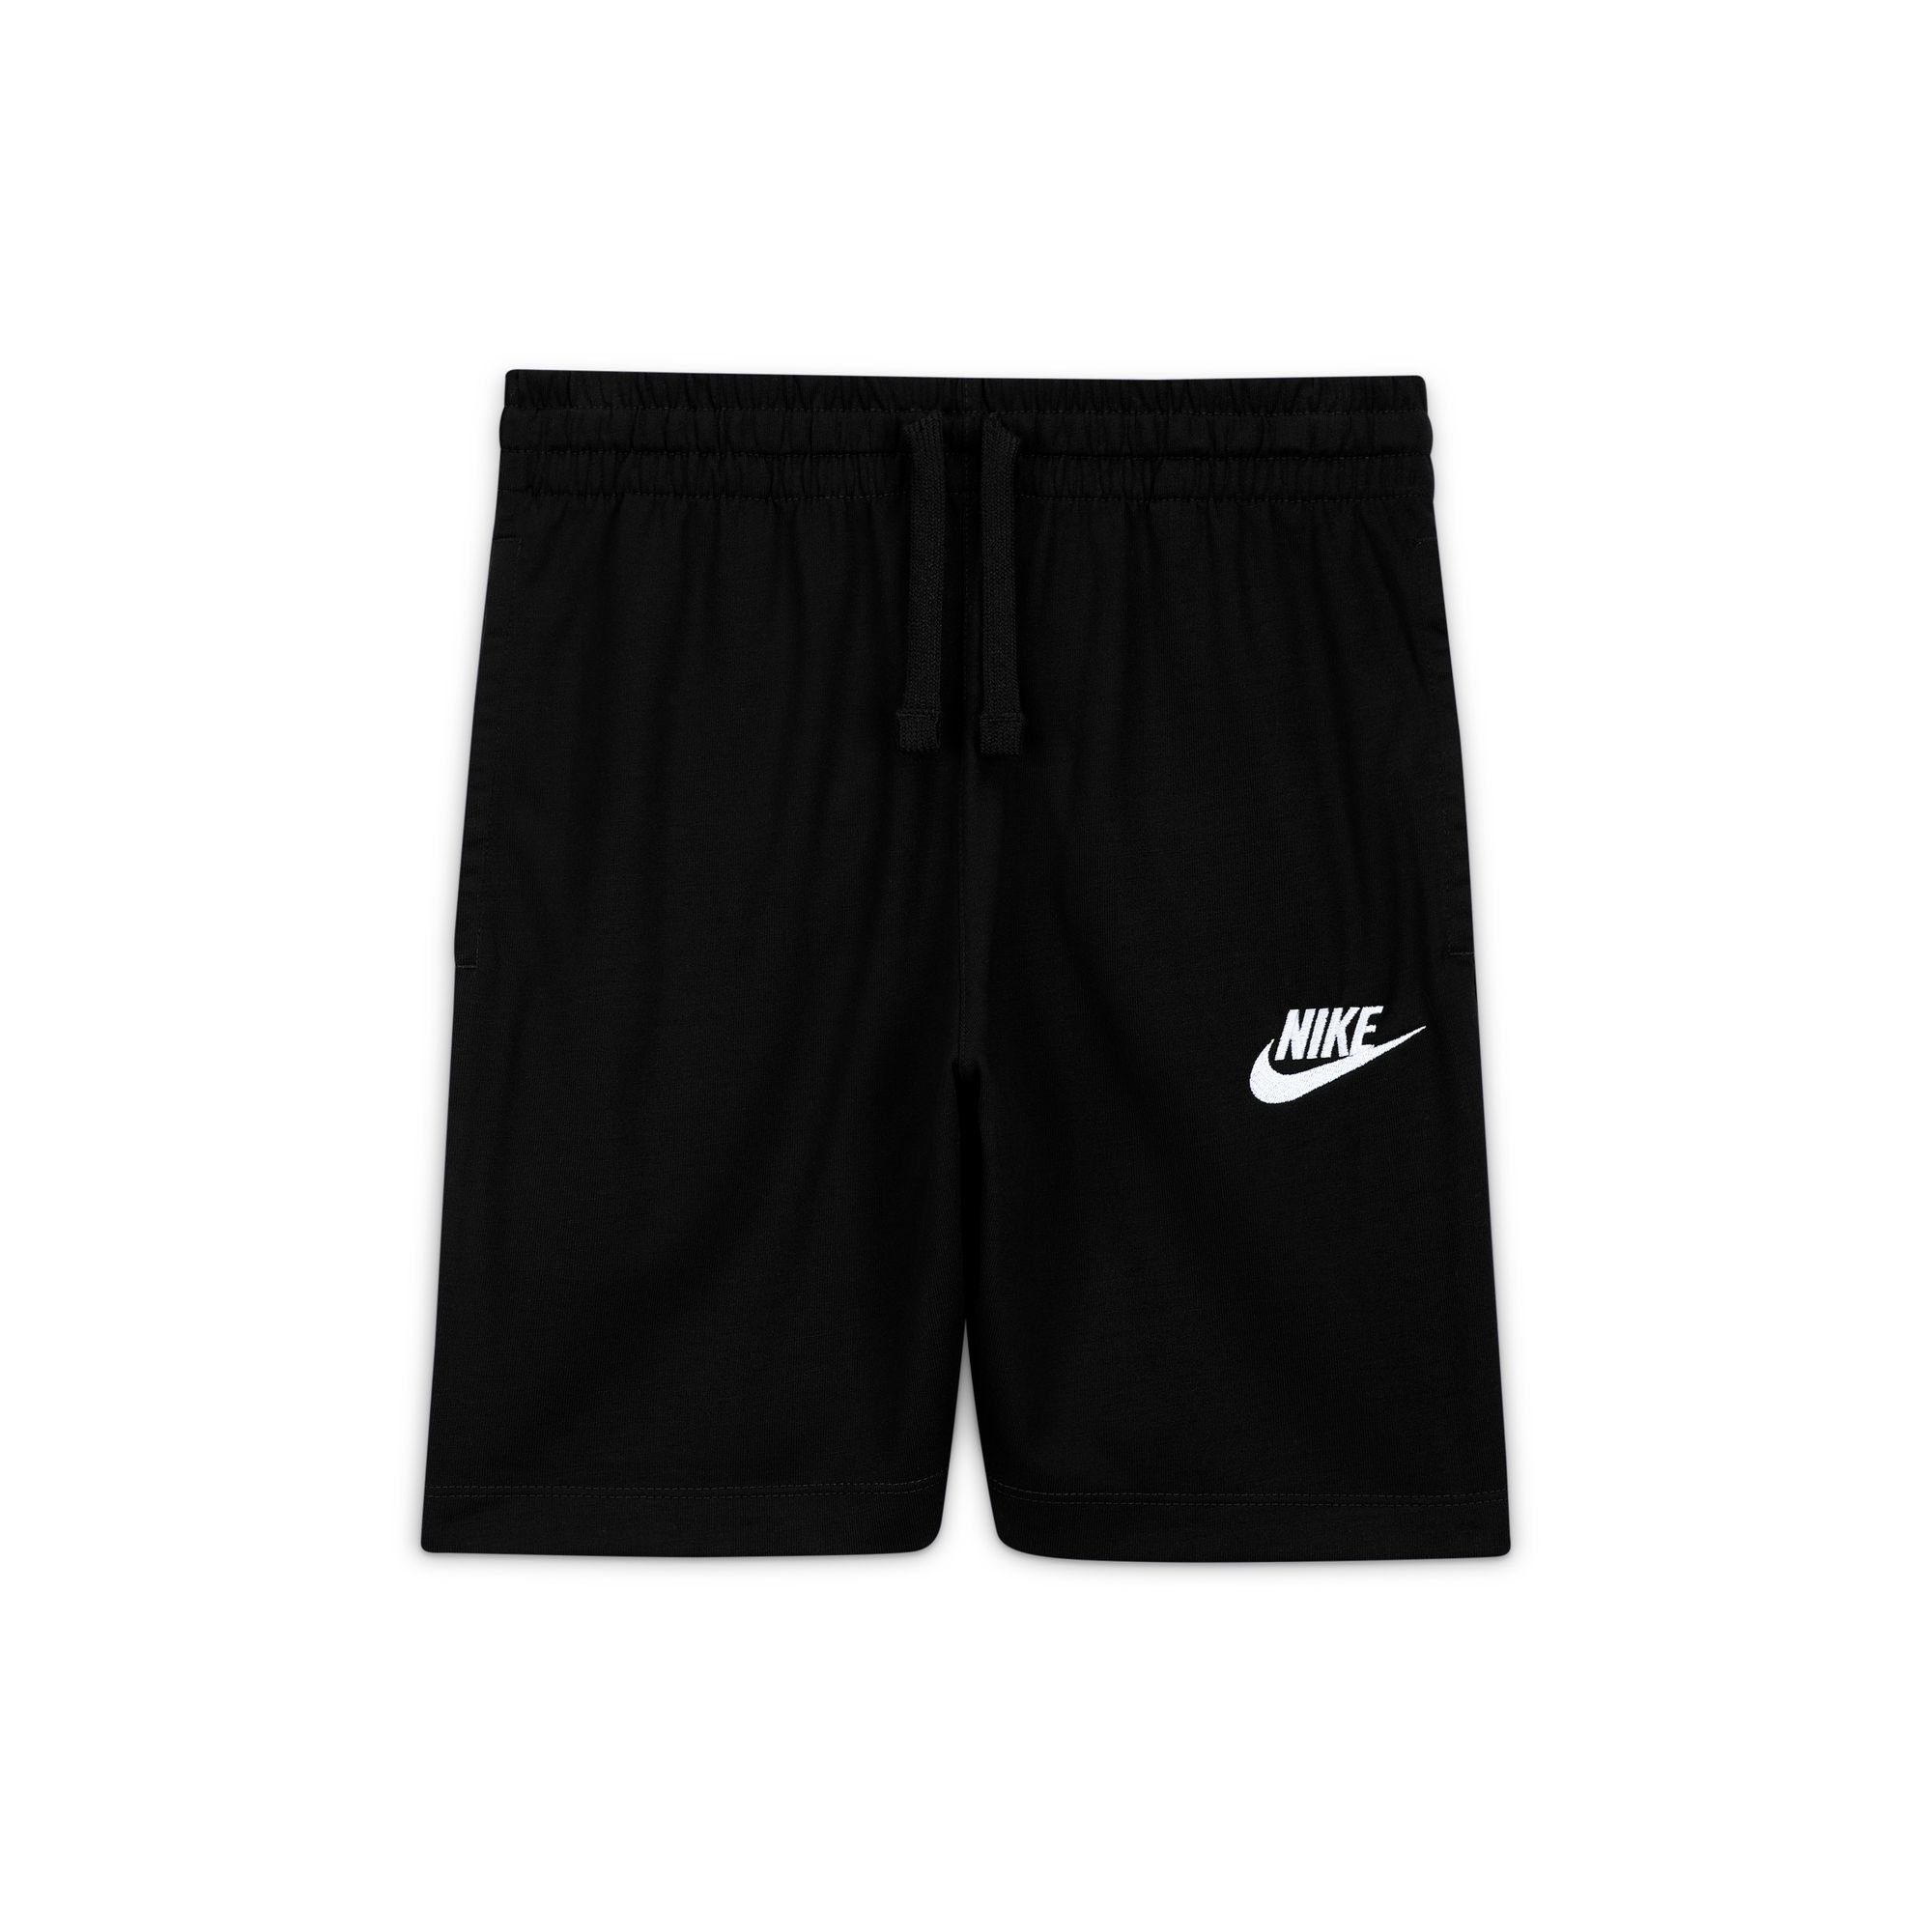 SHORTS BIG (BOYS) KIDS' Nike Shorts Sportswear JERSEY schwarz